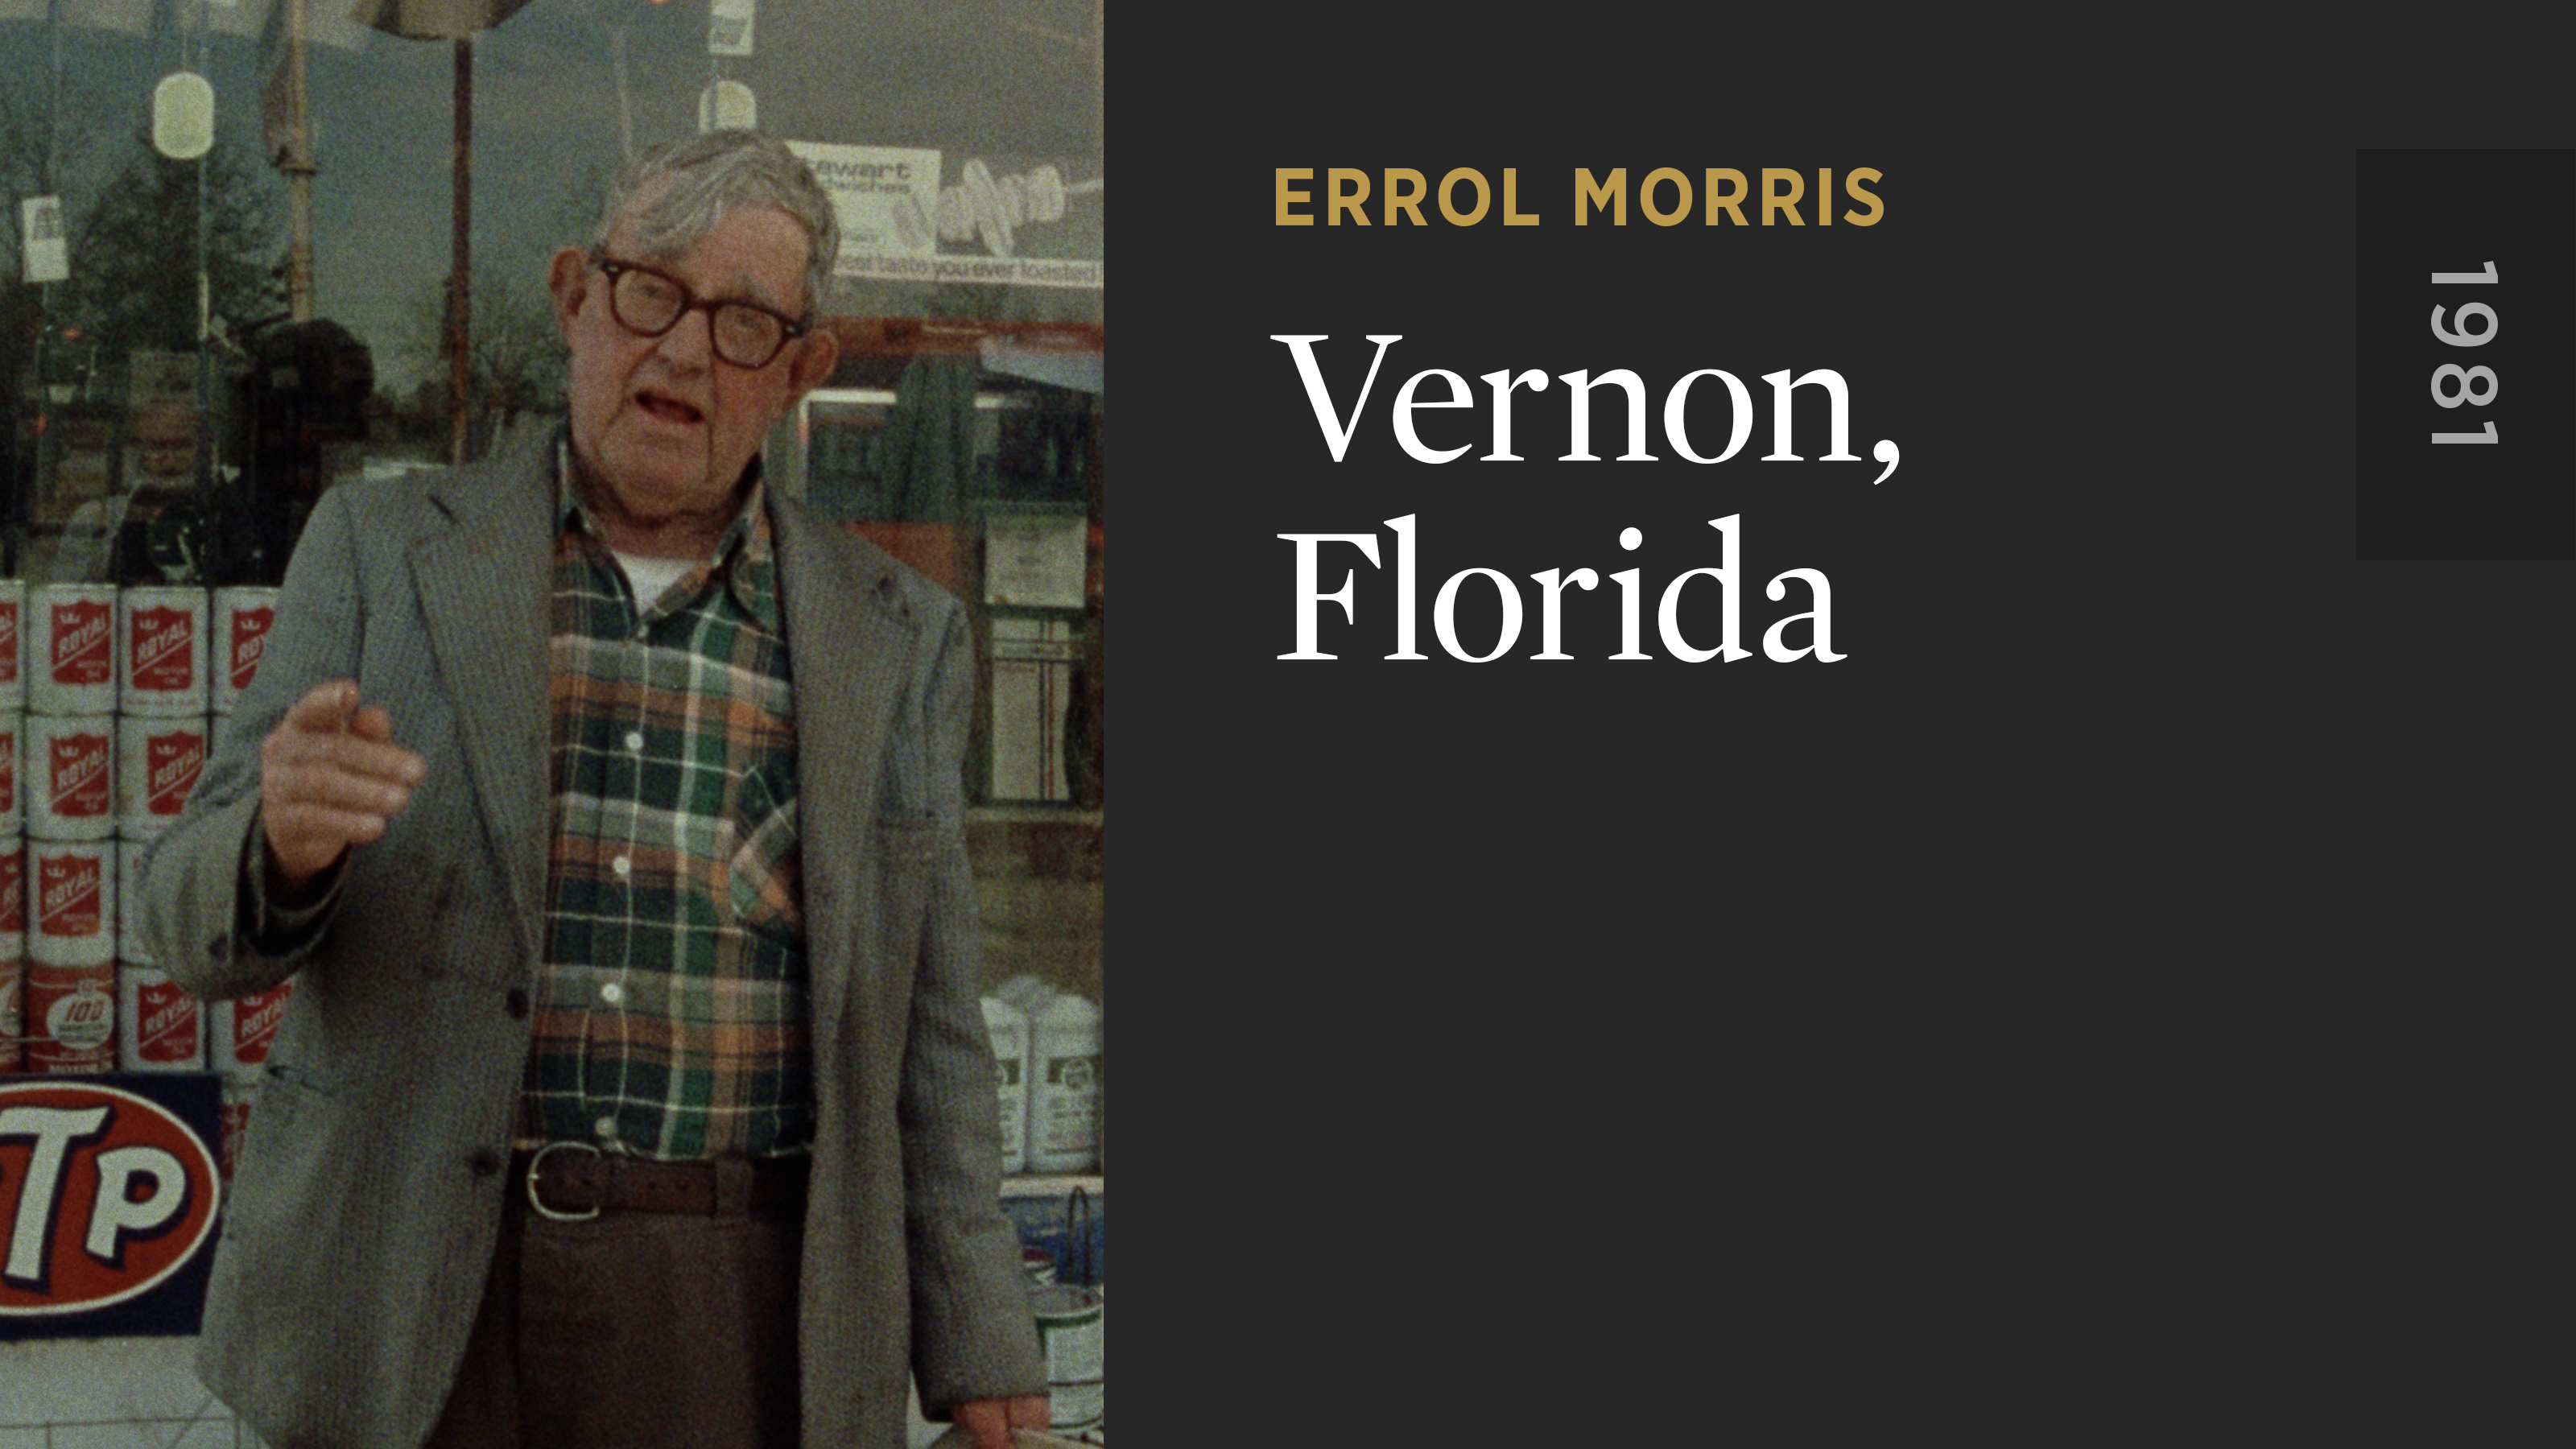 Vernon, Florida - The Criterion Channel